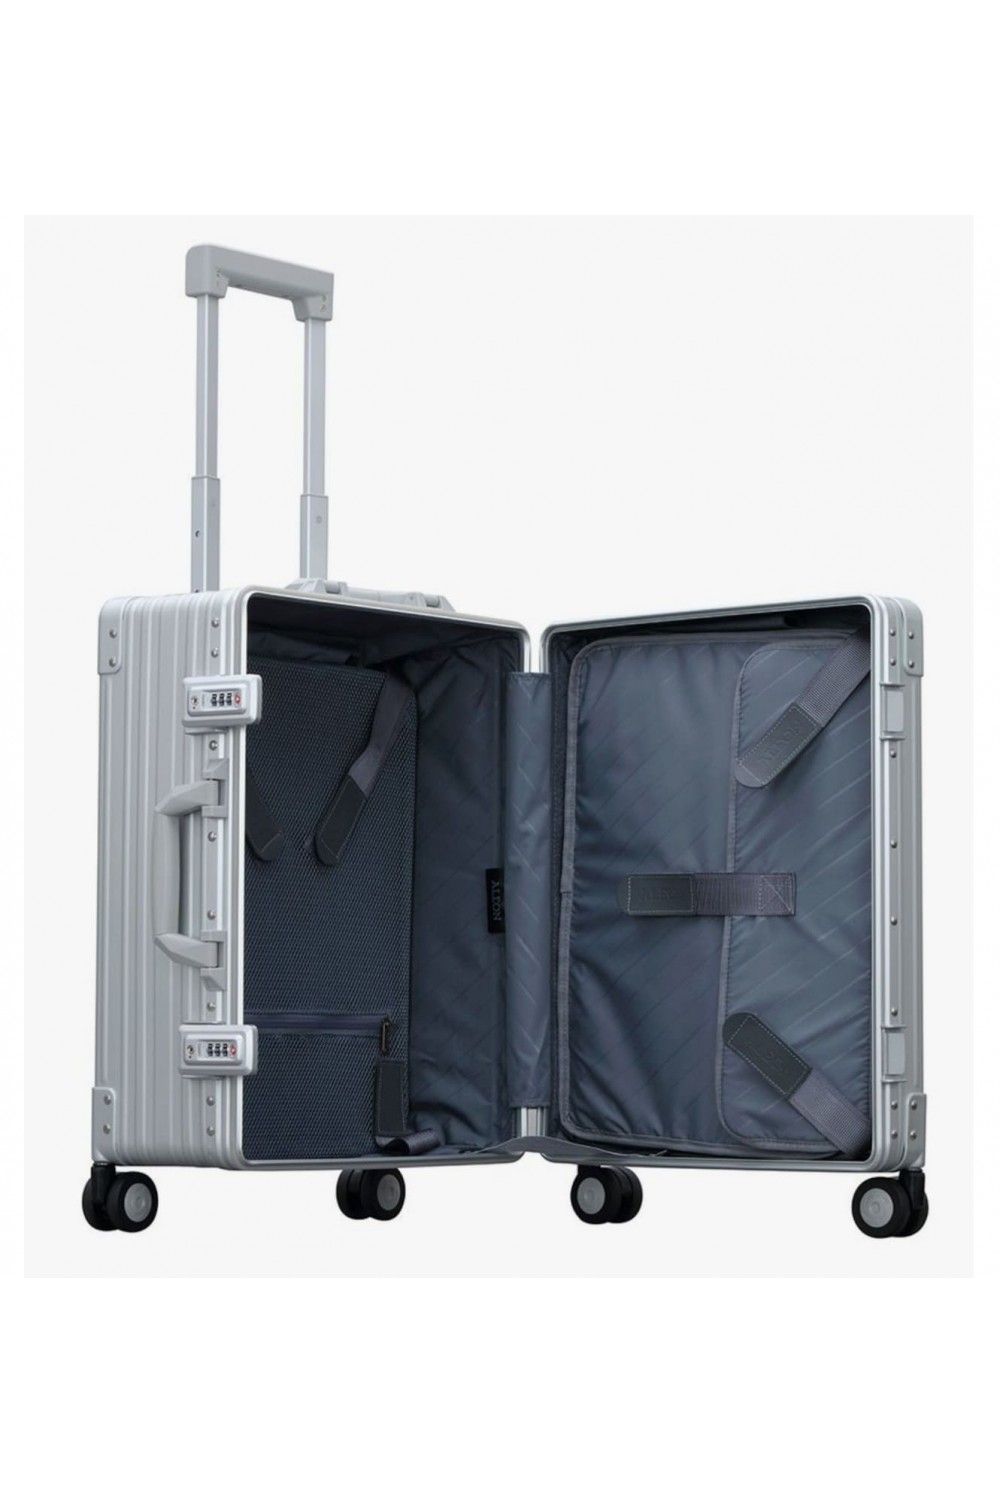 Handbag bag Alu suitcase Aleon 53cm 4 wheel